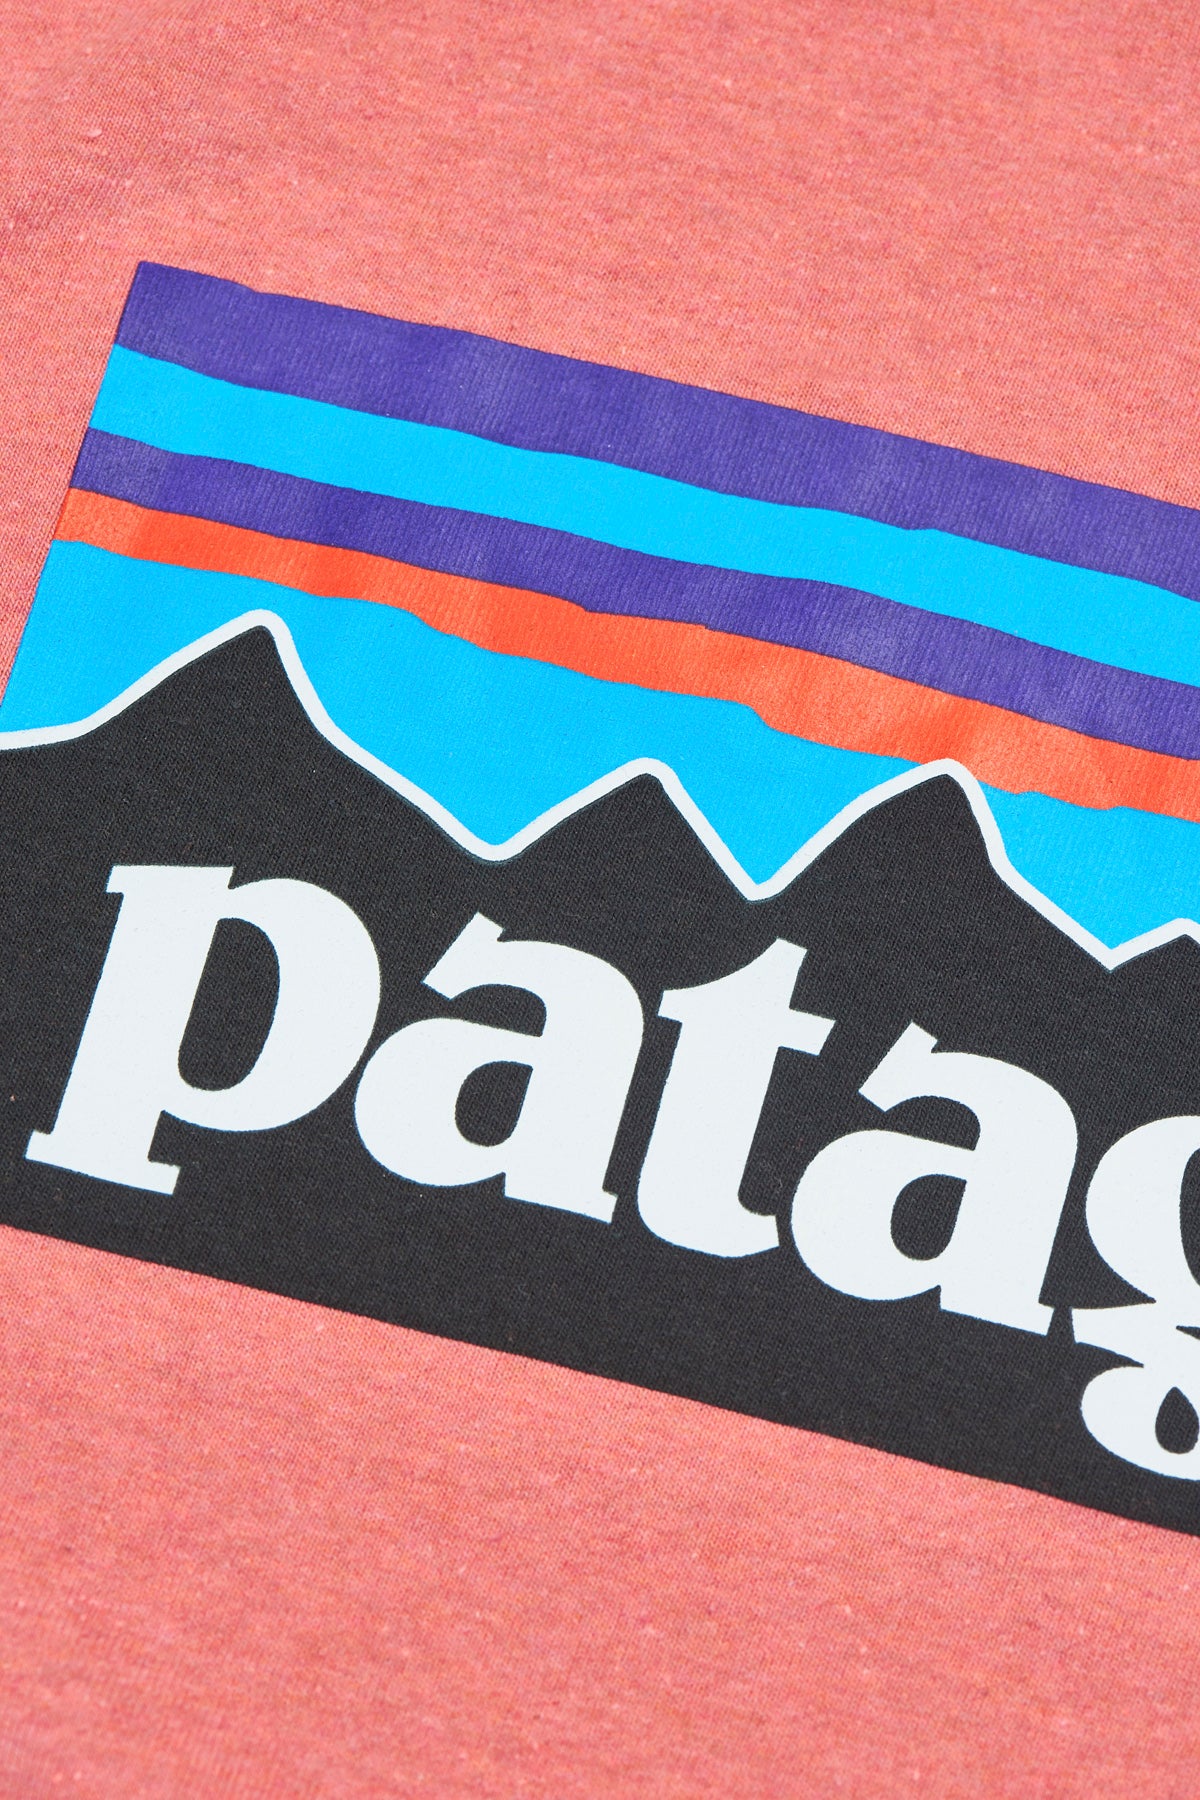 patagonia - P-6 logo Responsibili-Tee